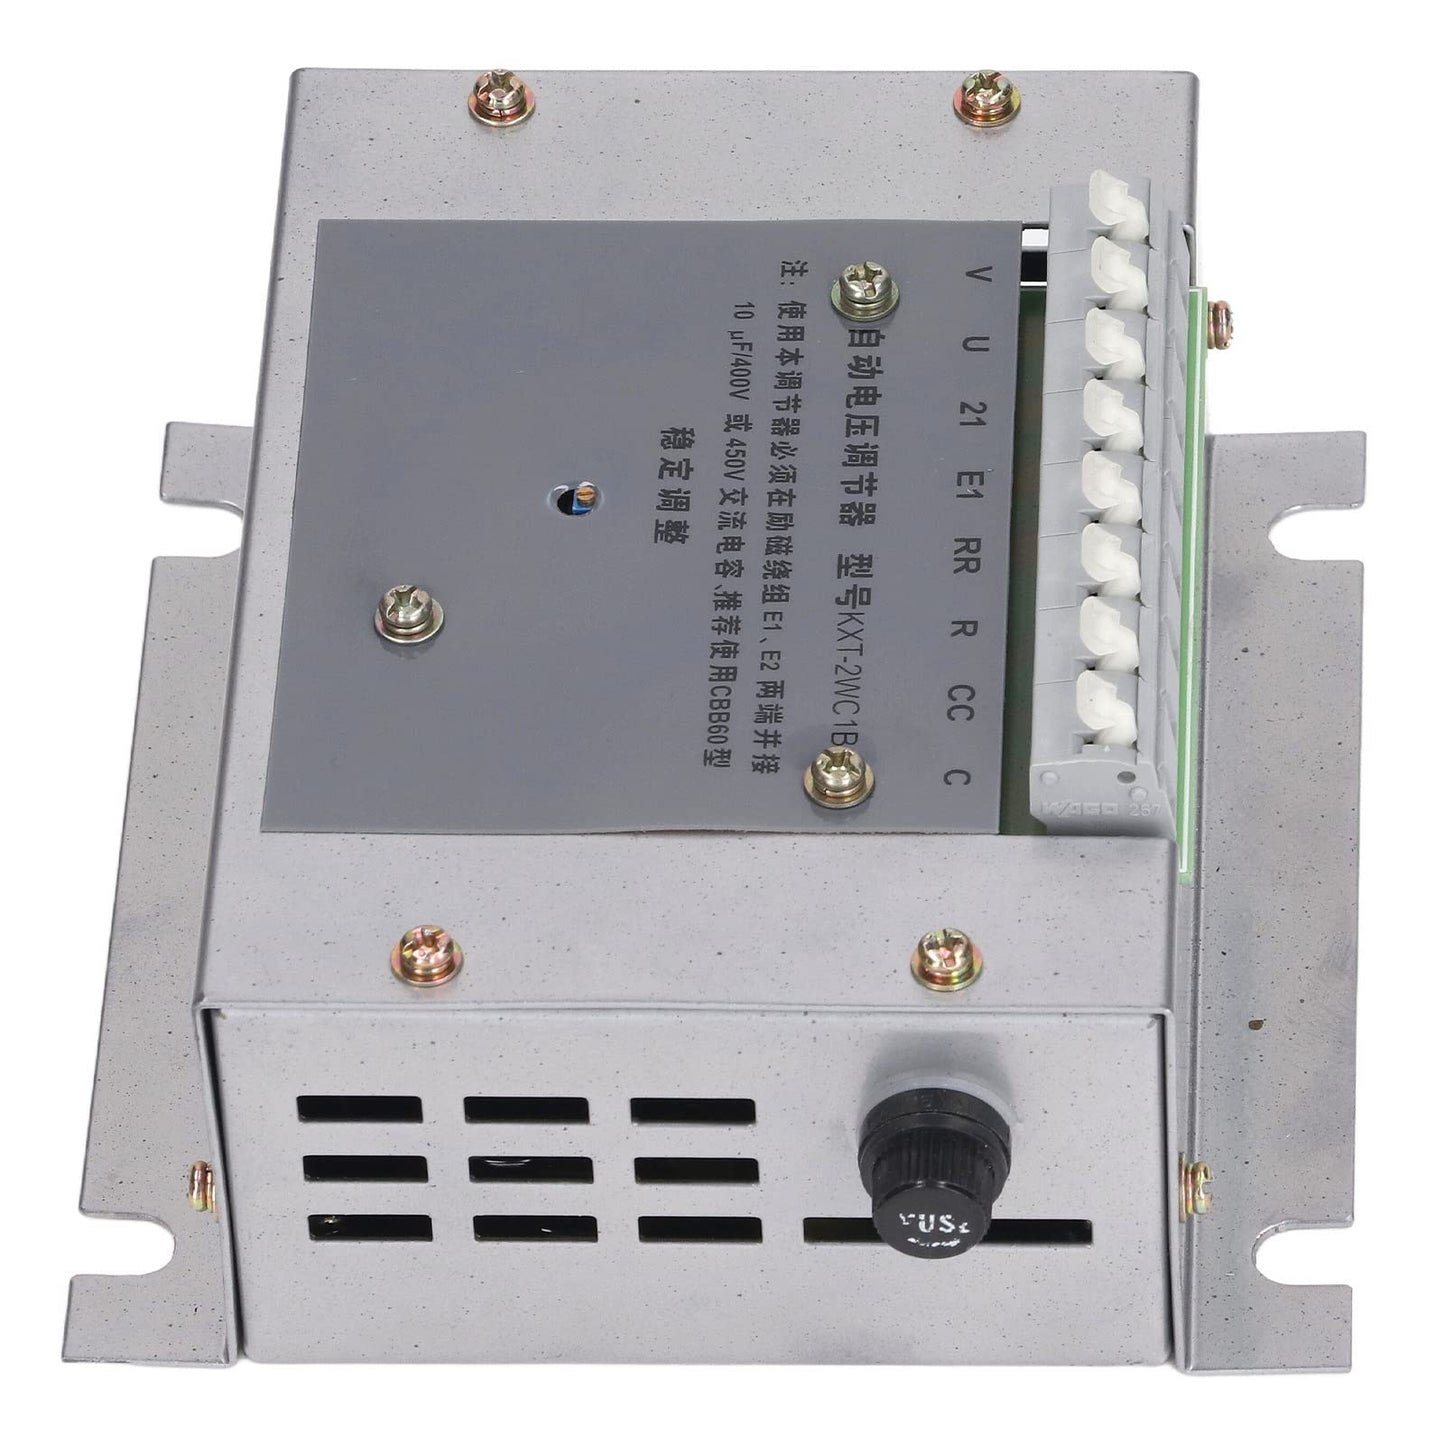 Excitation Voltage Regulator, Professional Excitation Voltage Stabilizer Quick Response for AC Synchronous Generator